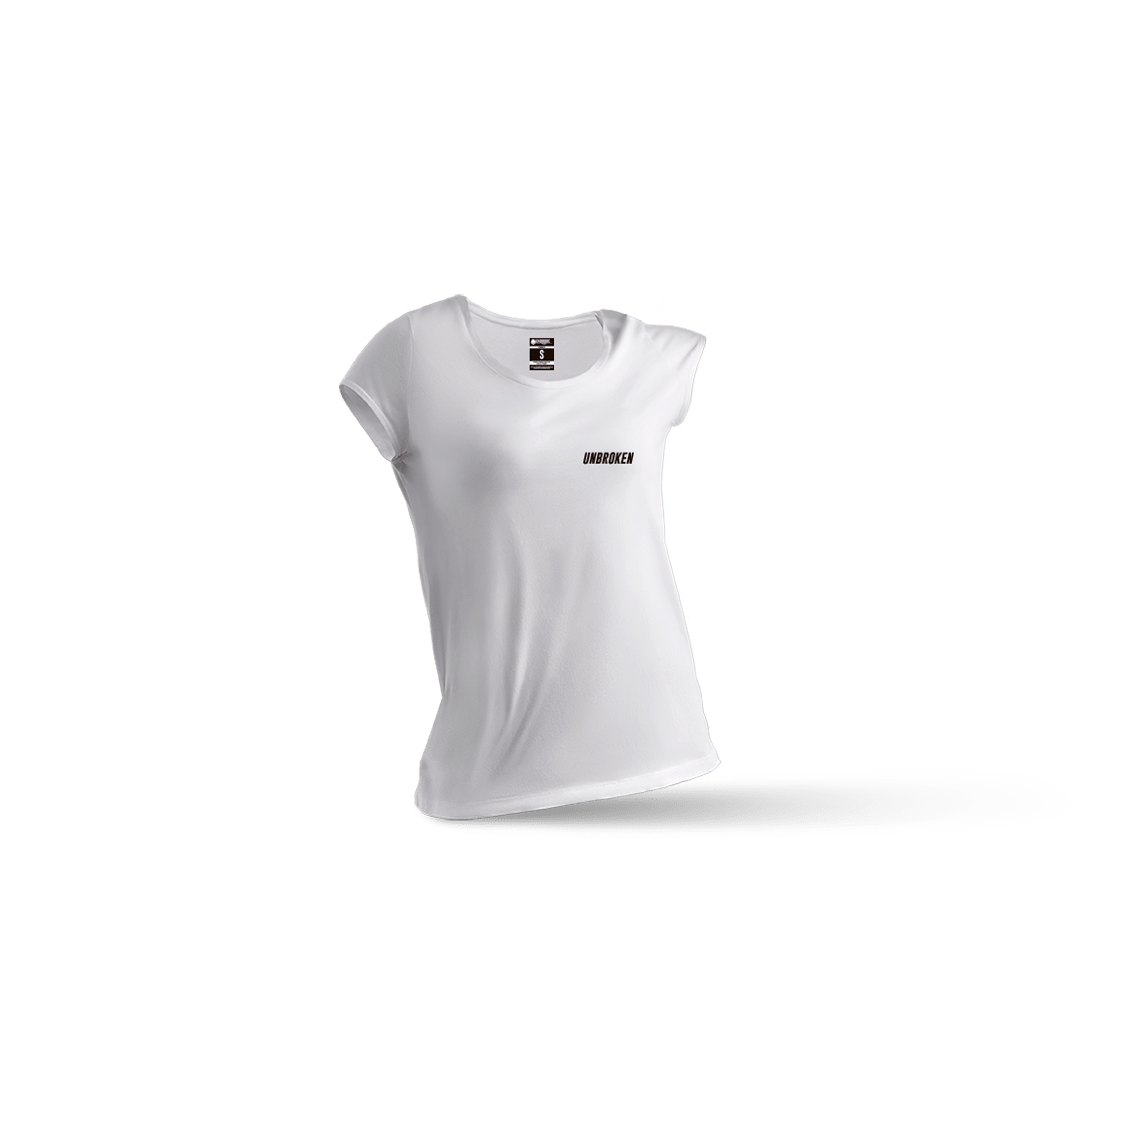 Camiseta Basic White mujer - Unbroken Sports Wear 